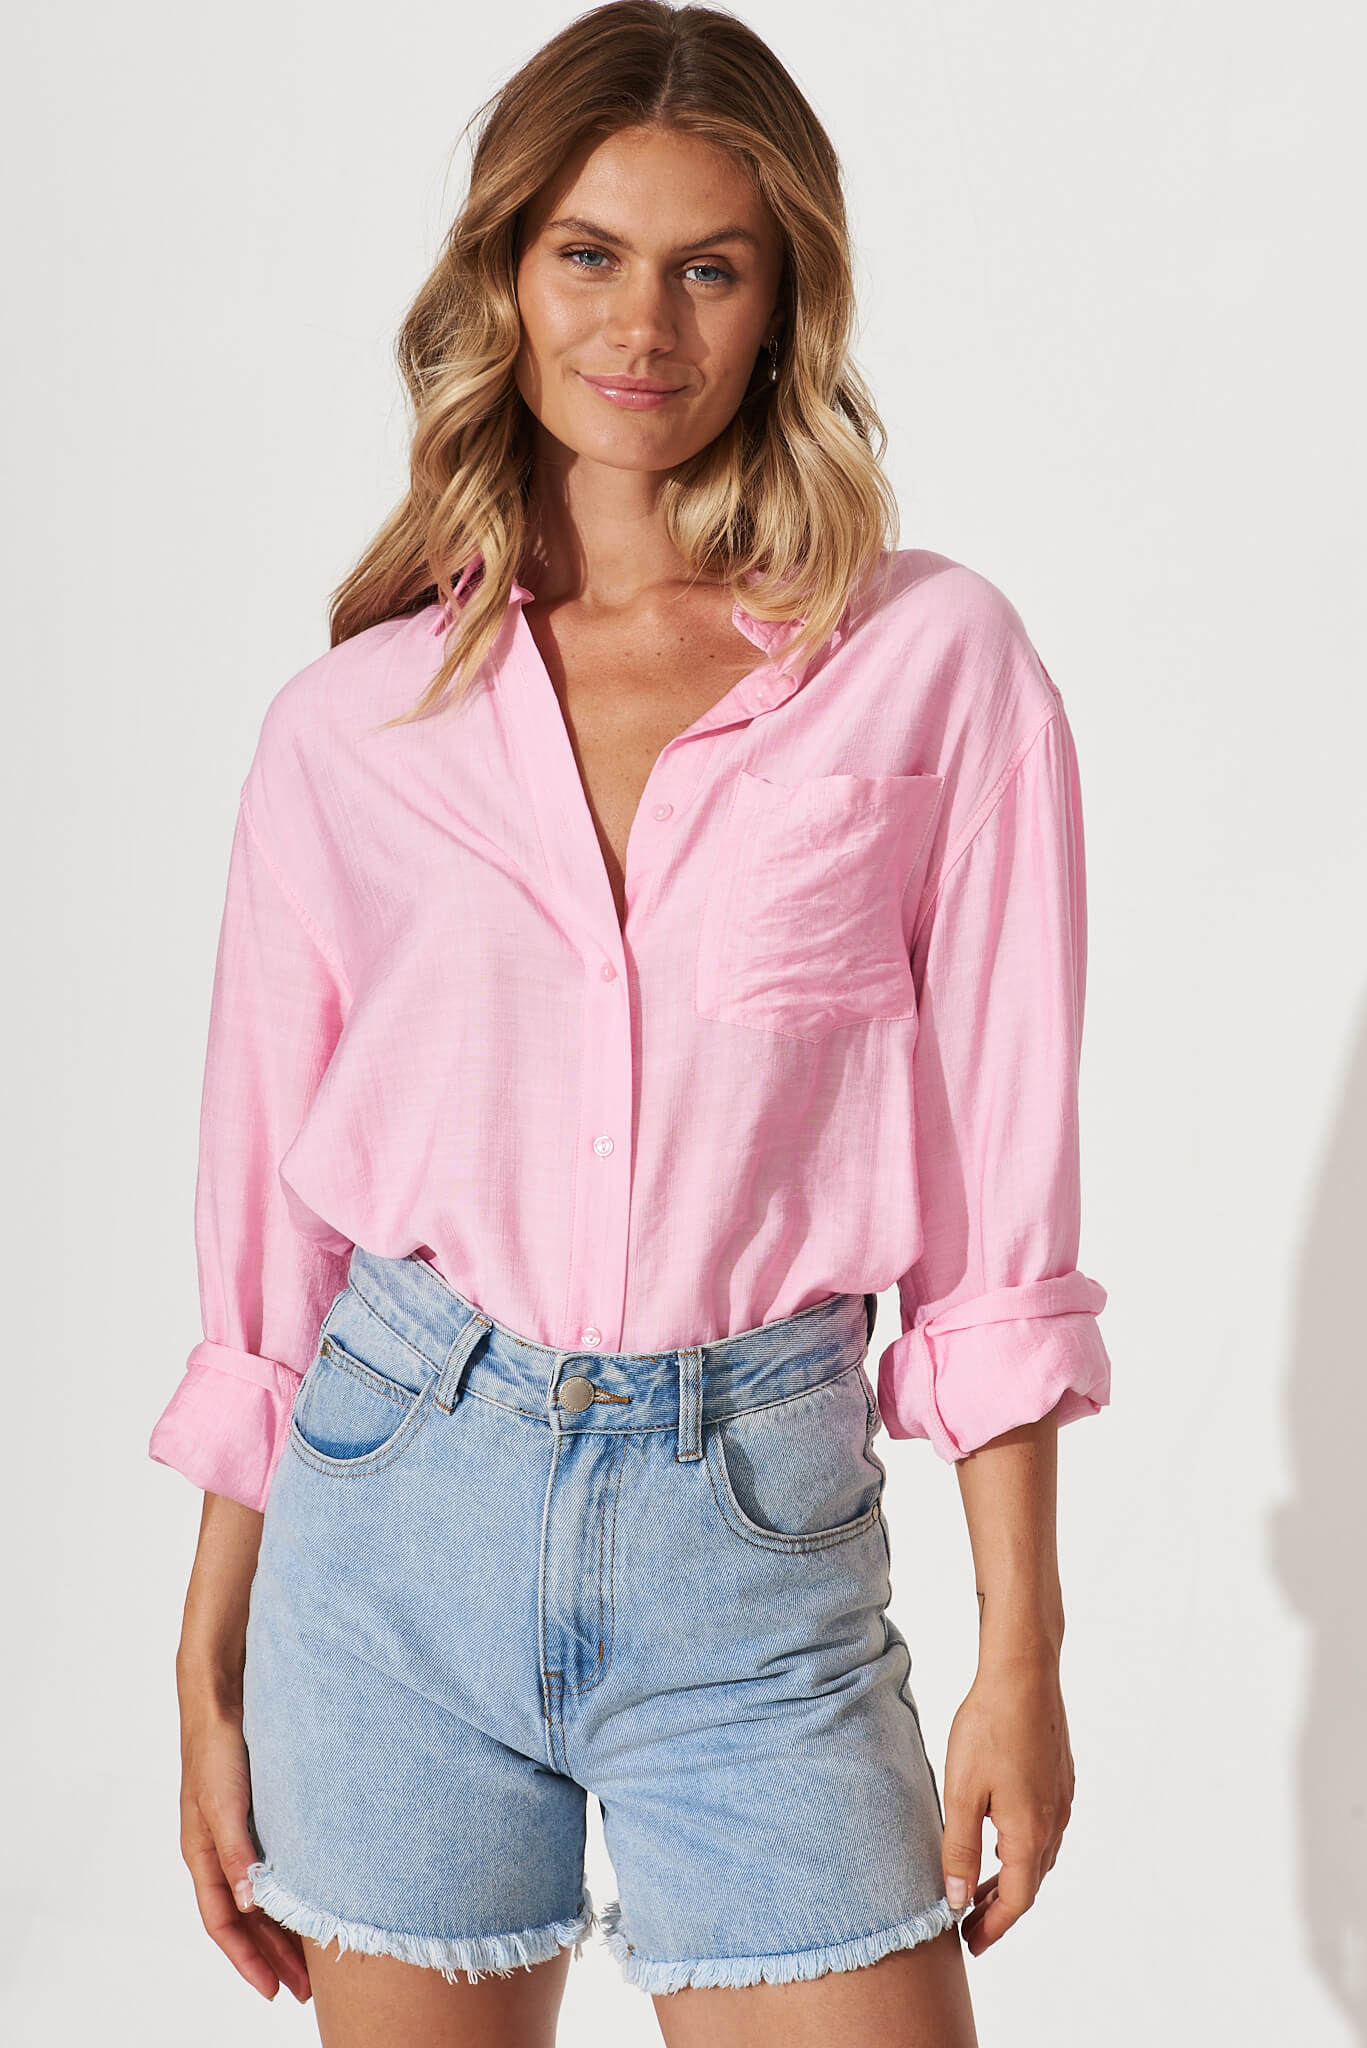 Sylvia Shirt In Pink - front